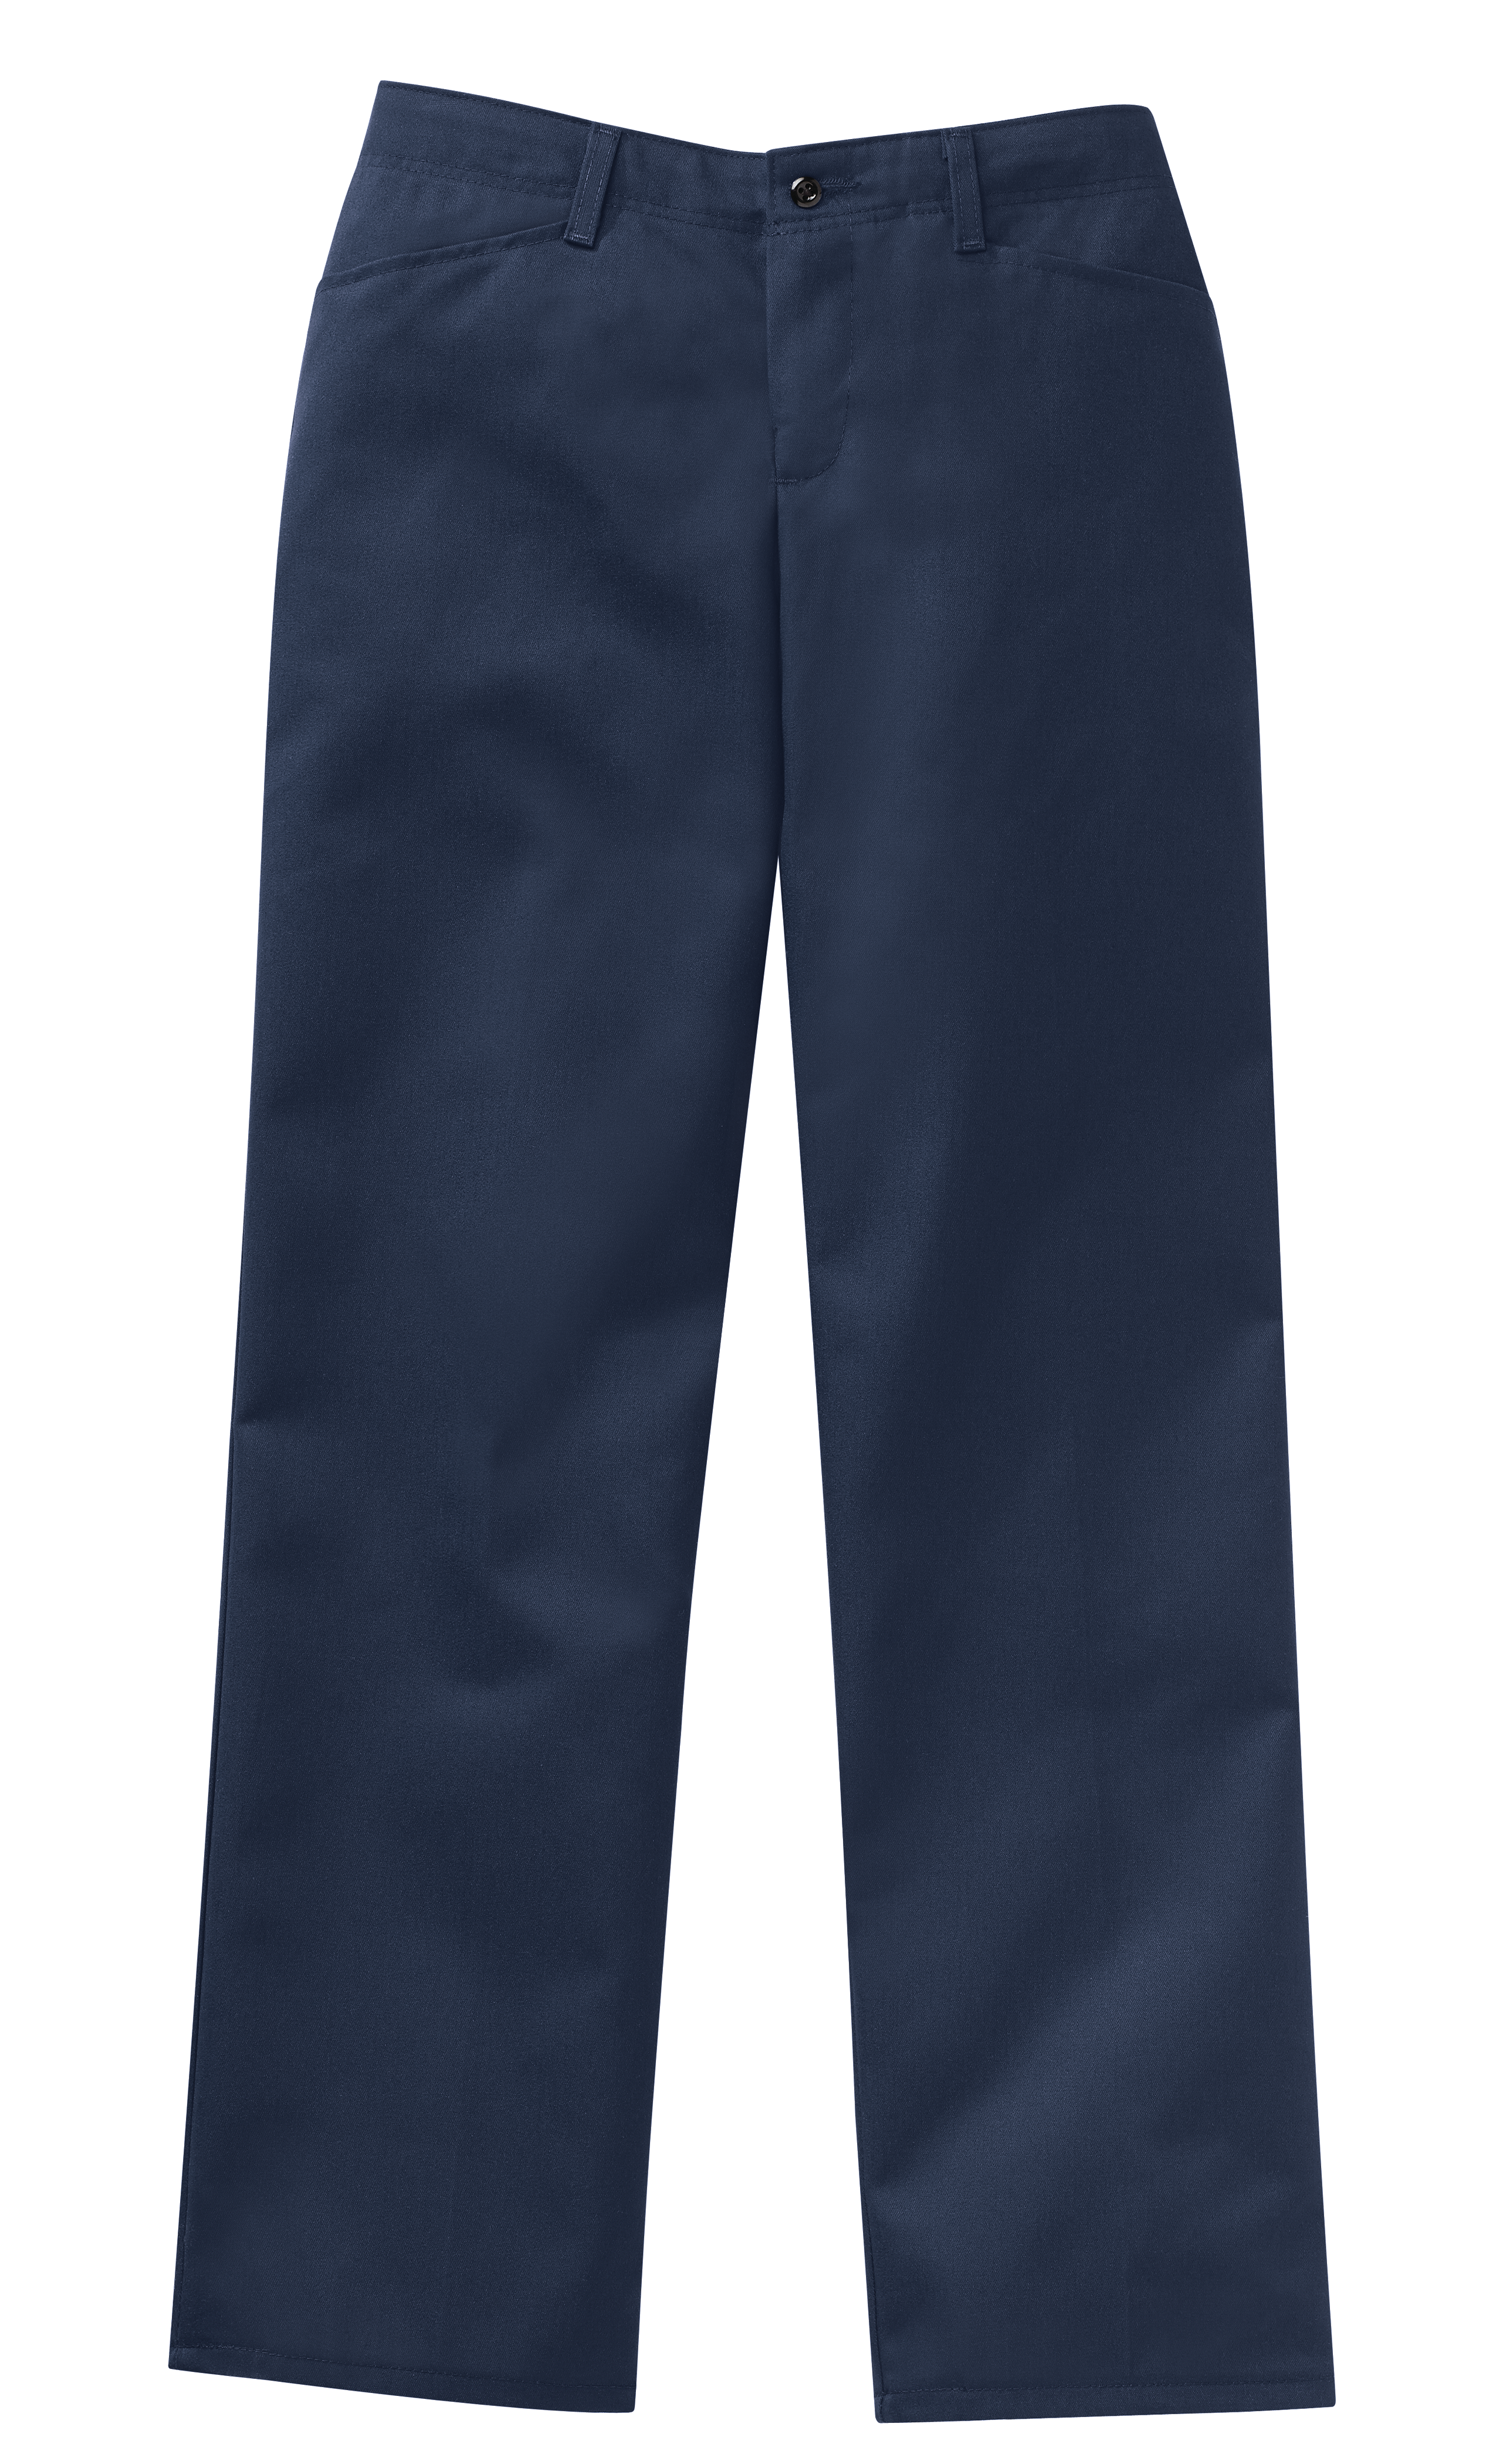 Old Navy Skinny School Uniform Pants for Girls  ShopStyle Boys Jeans